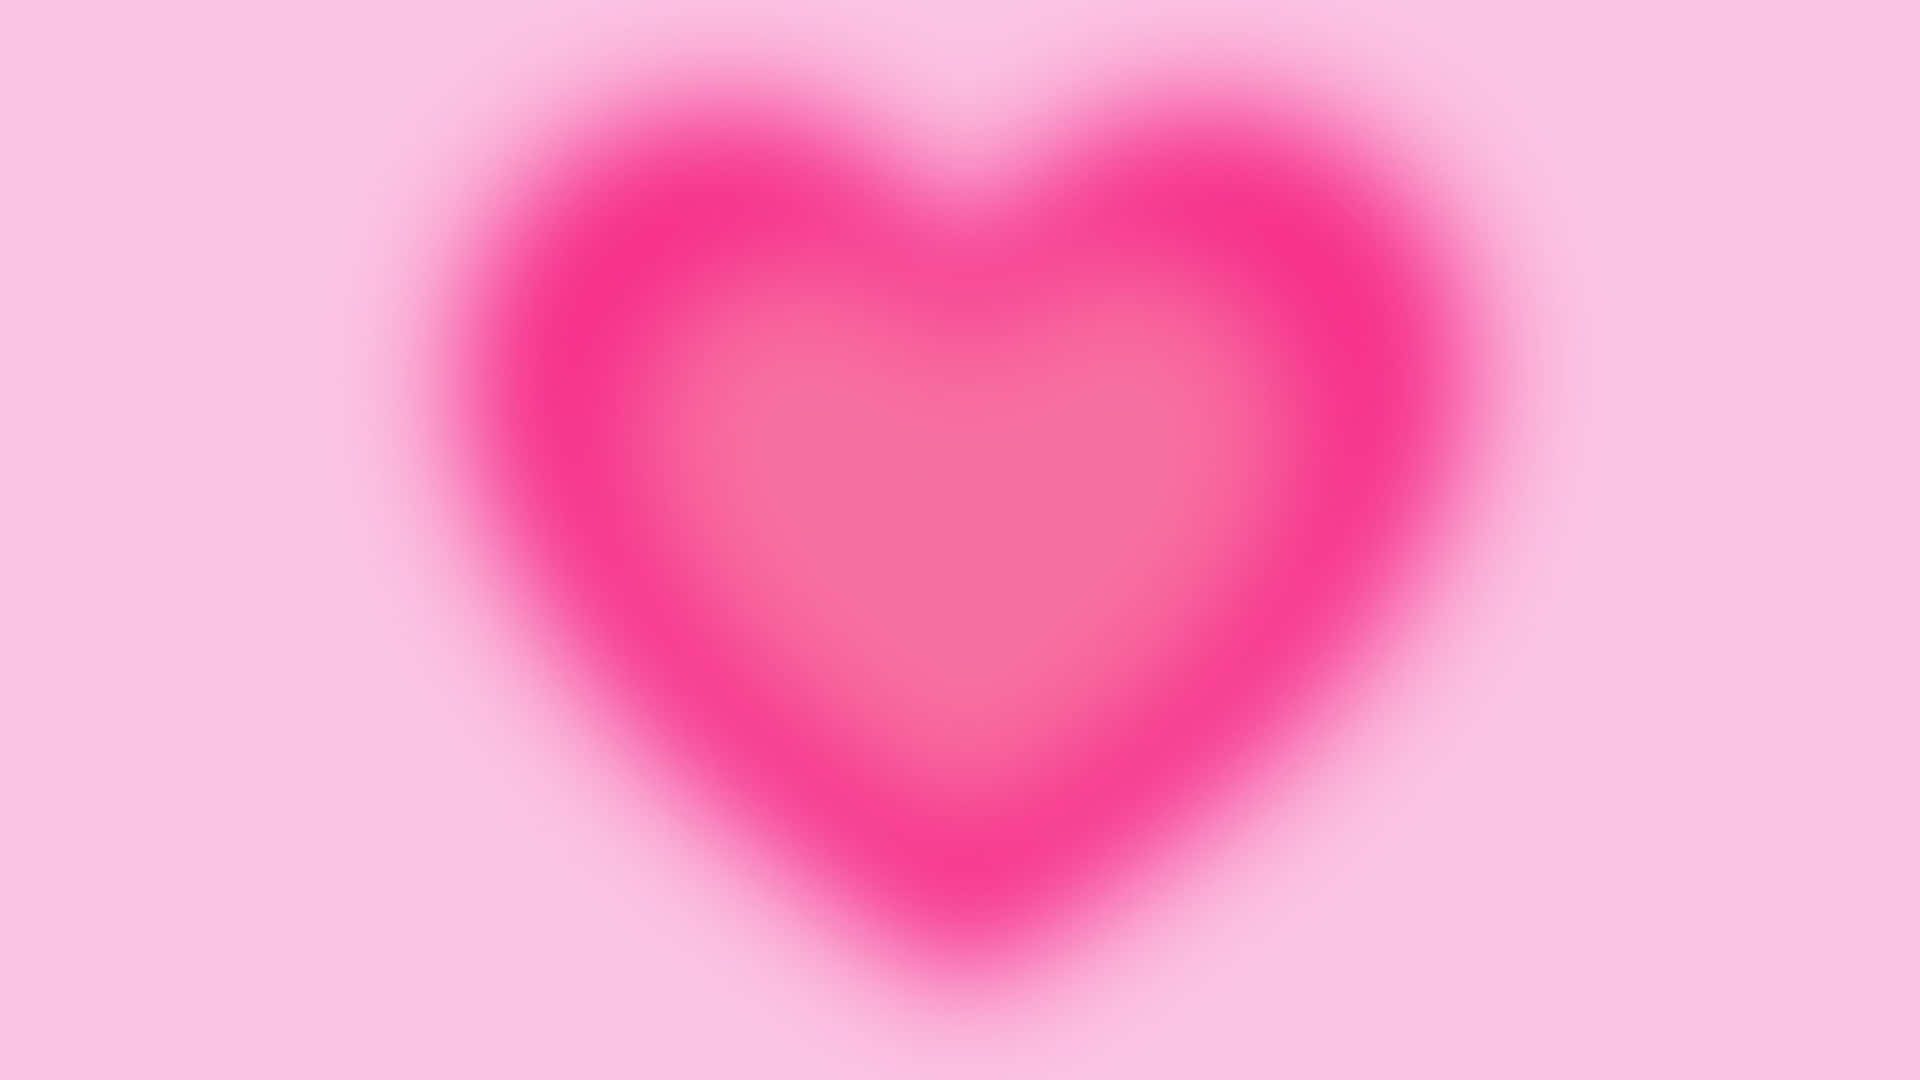 Abstract Blurry Heart Background.jpg Wallpaper